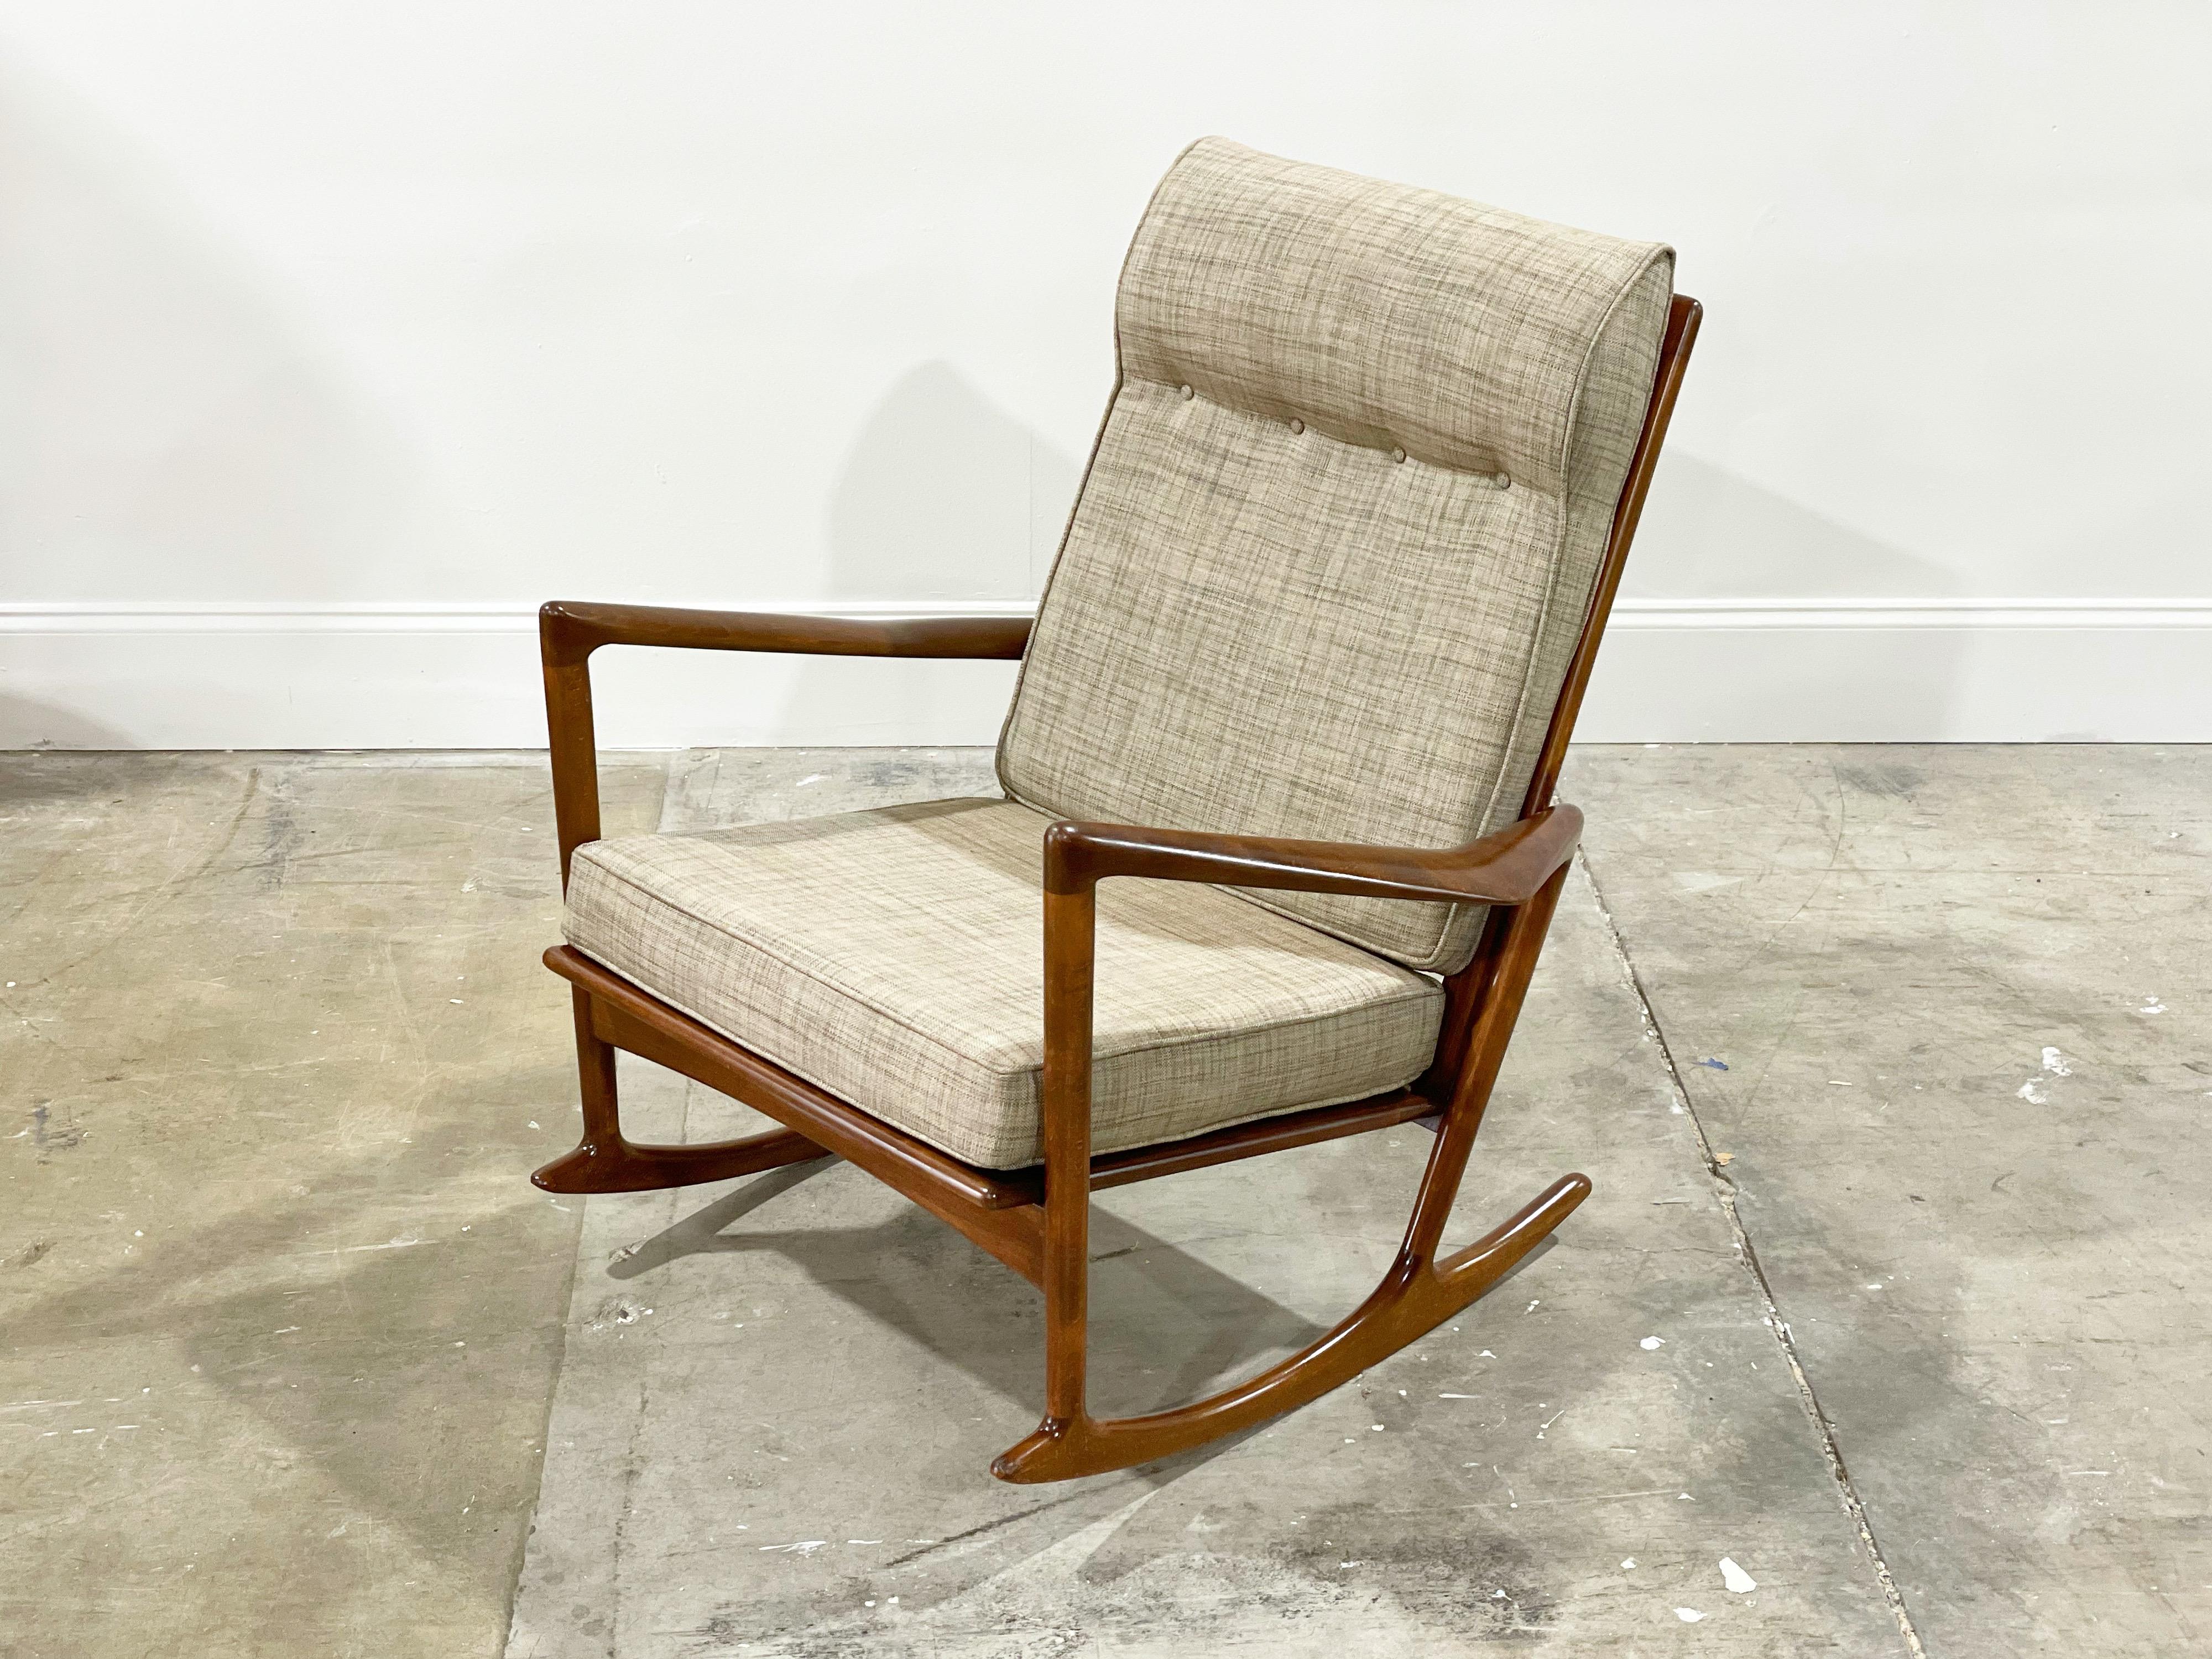 Ib Kofod Larsen Rocking Chair, Midcentury Danish Modern Sculpted Rocker 1